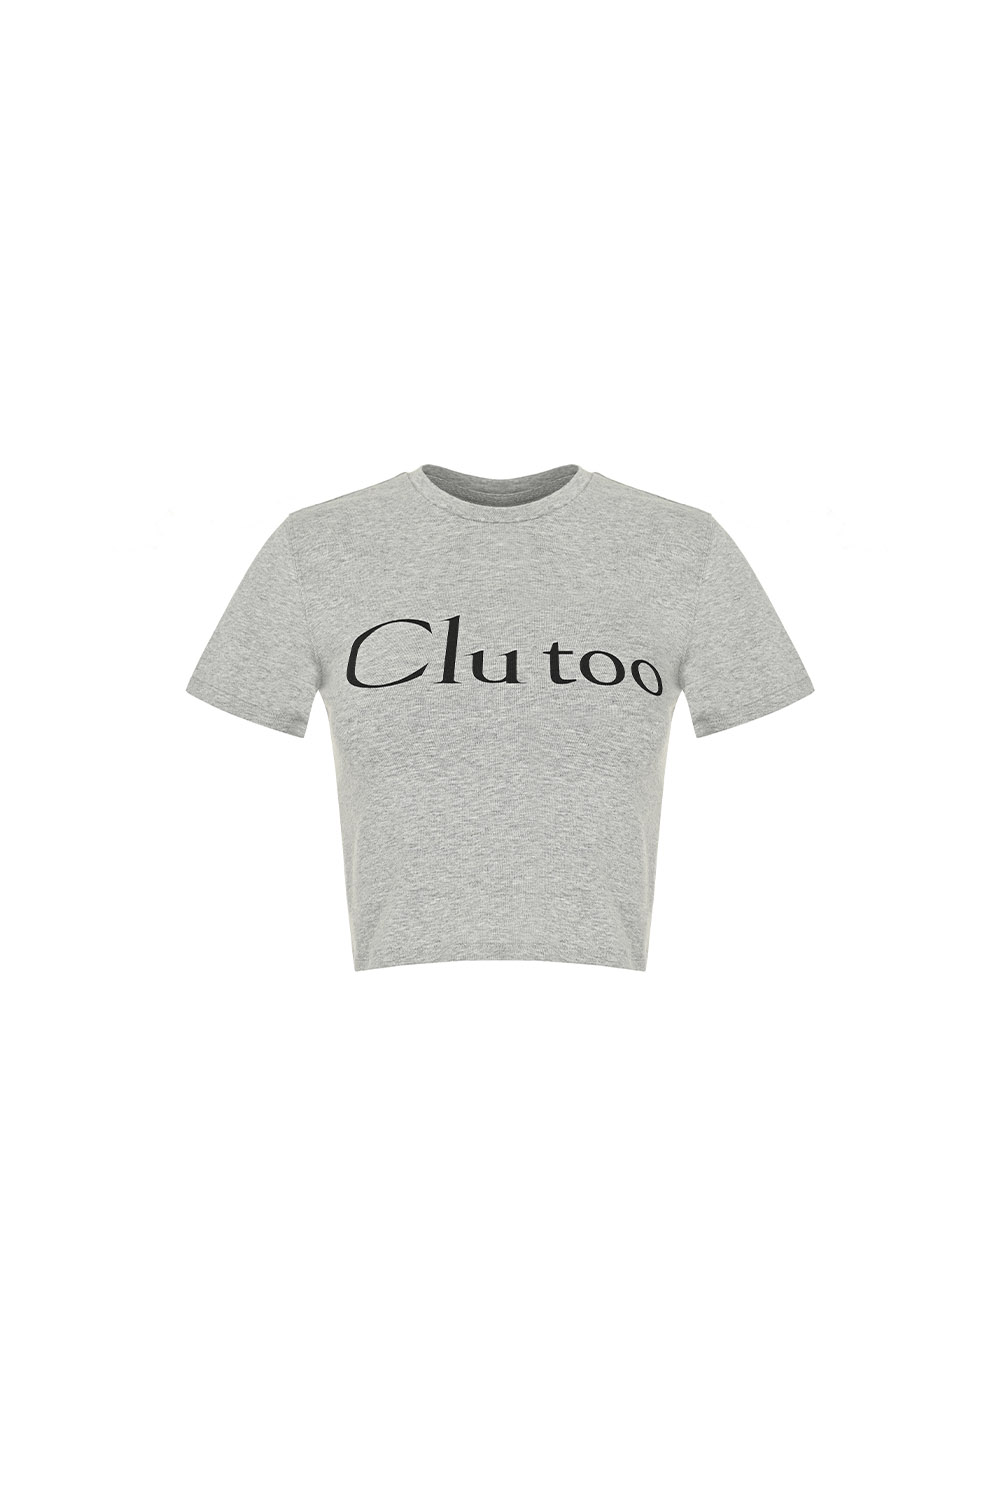 Clu too Crop T-shirt_grey